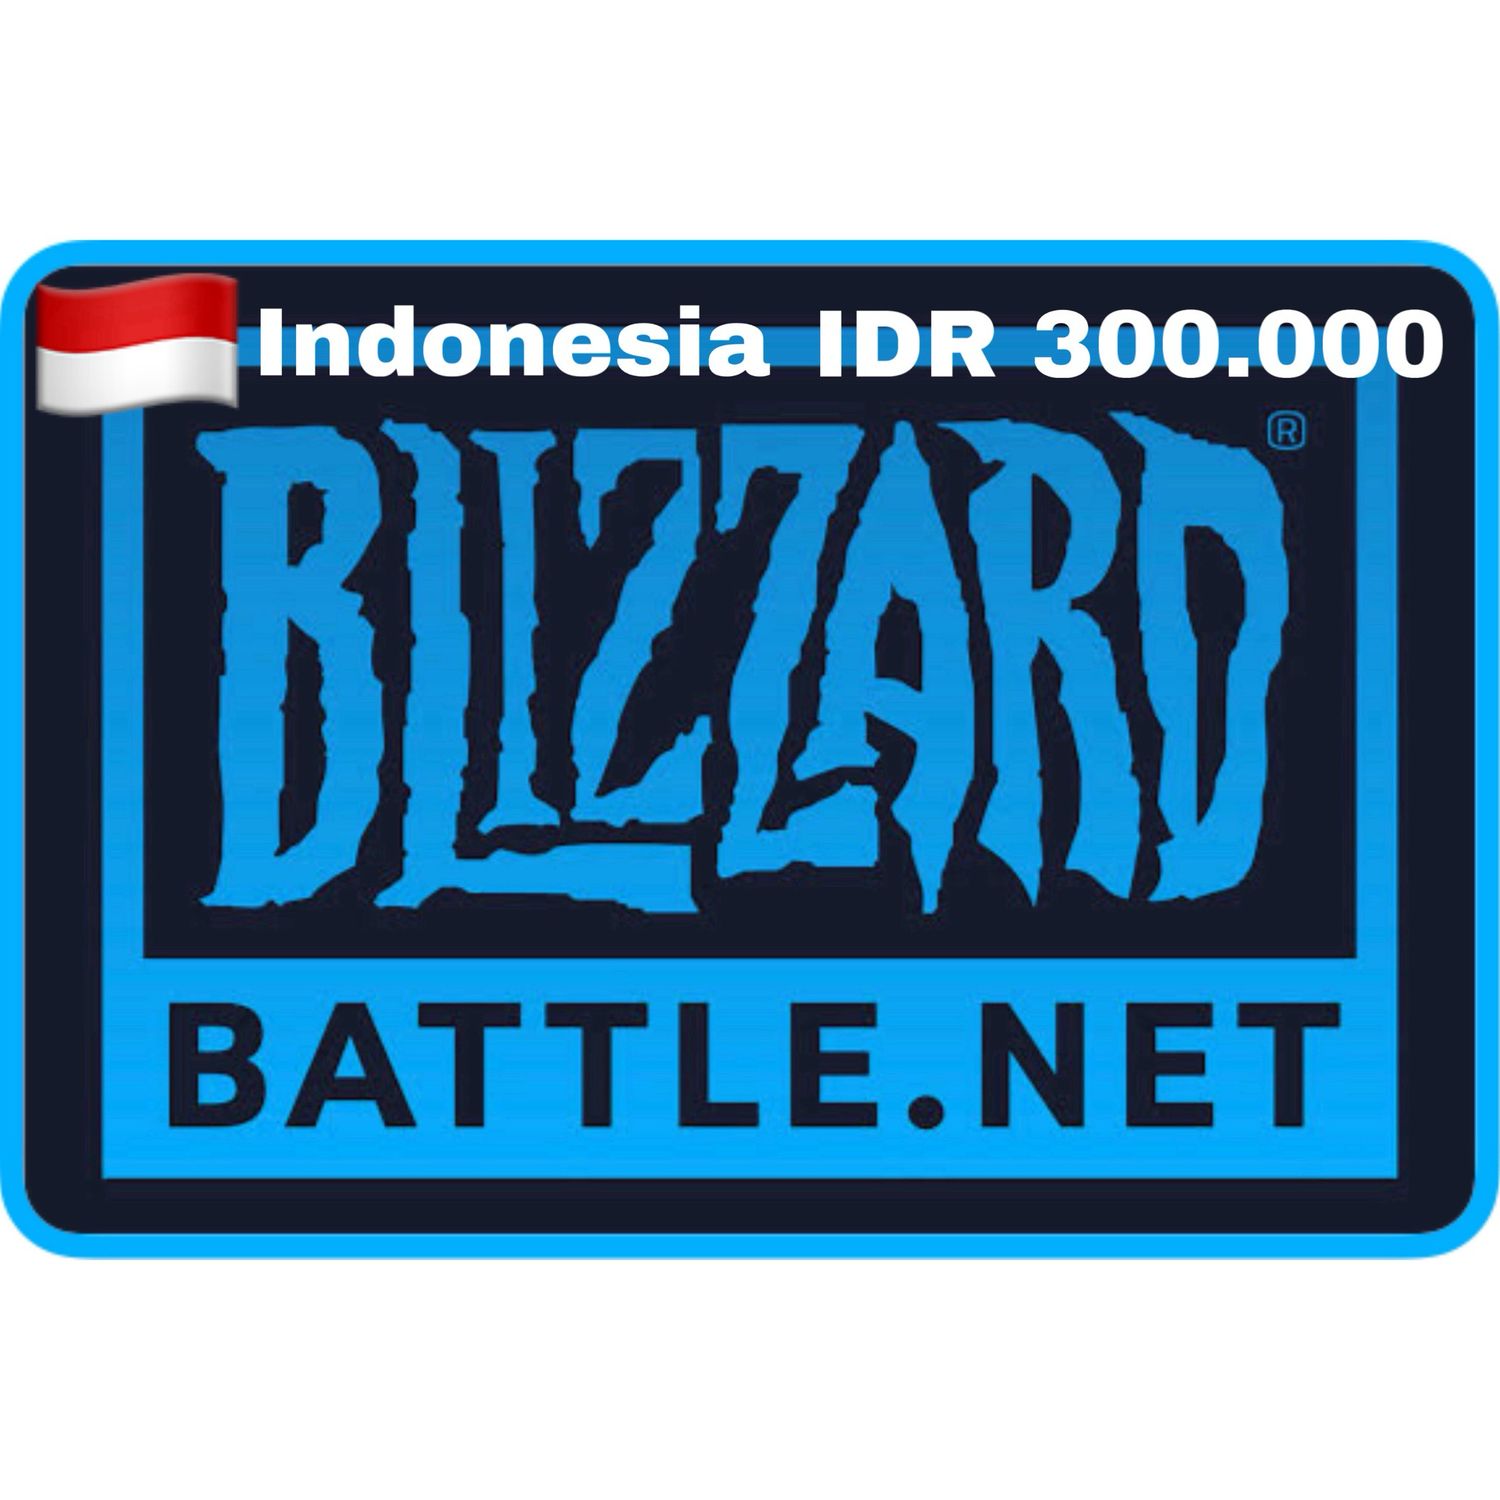 Battlenet Blizzard Gift Card Indonesia IDR 300.000